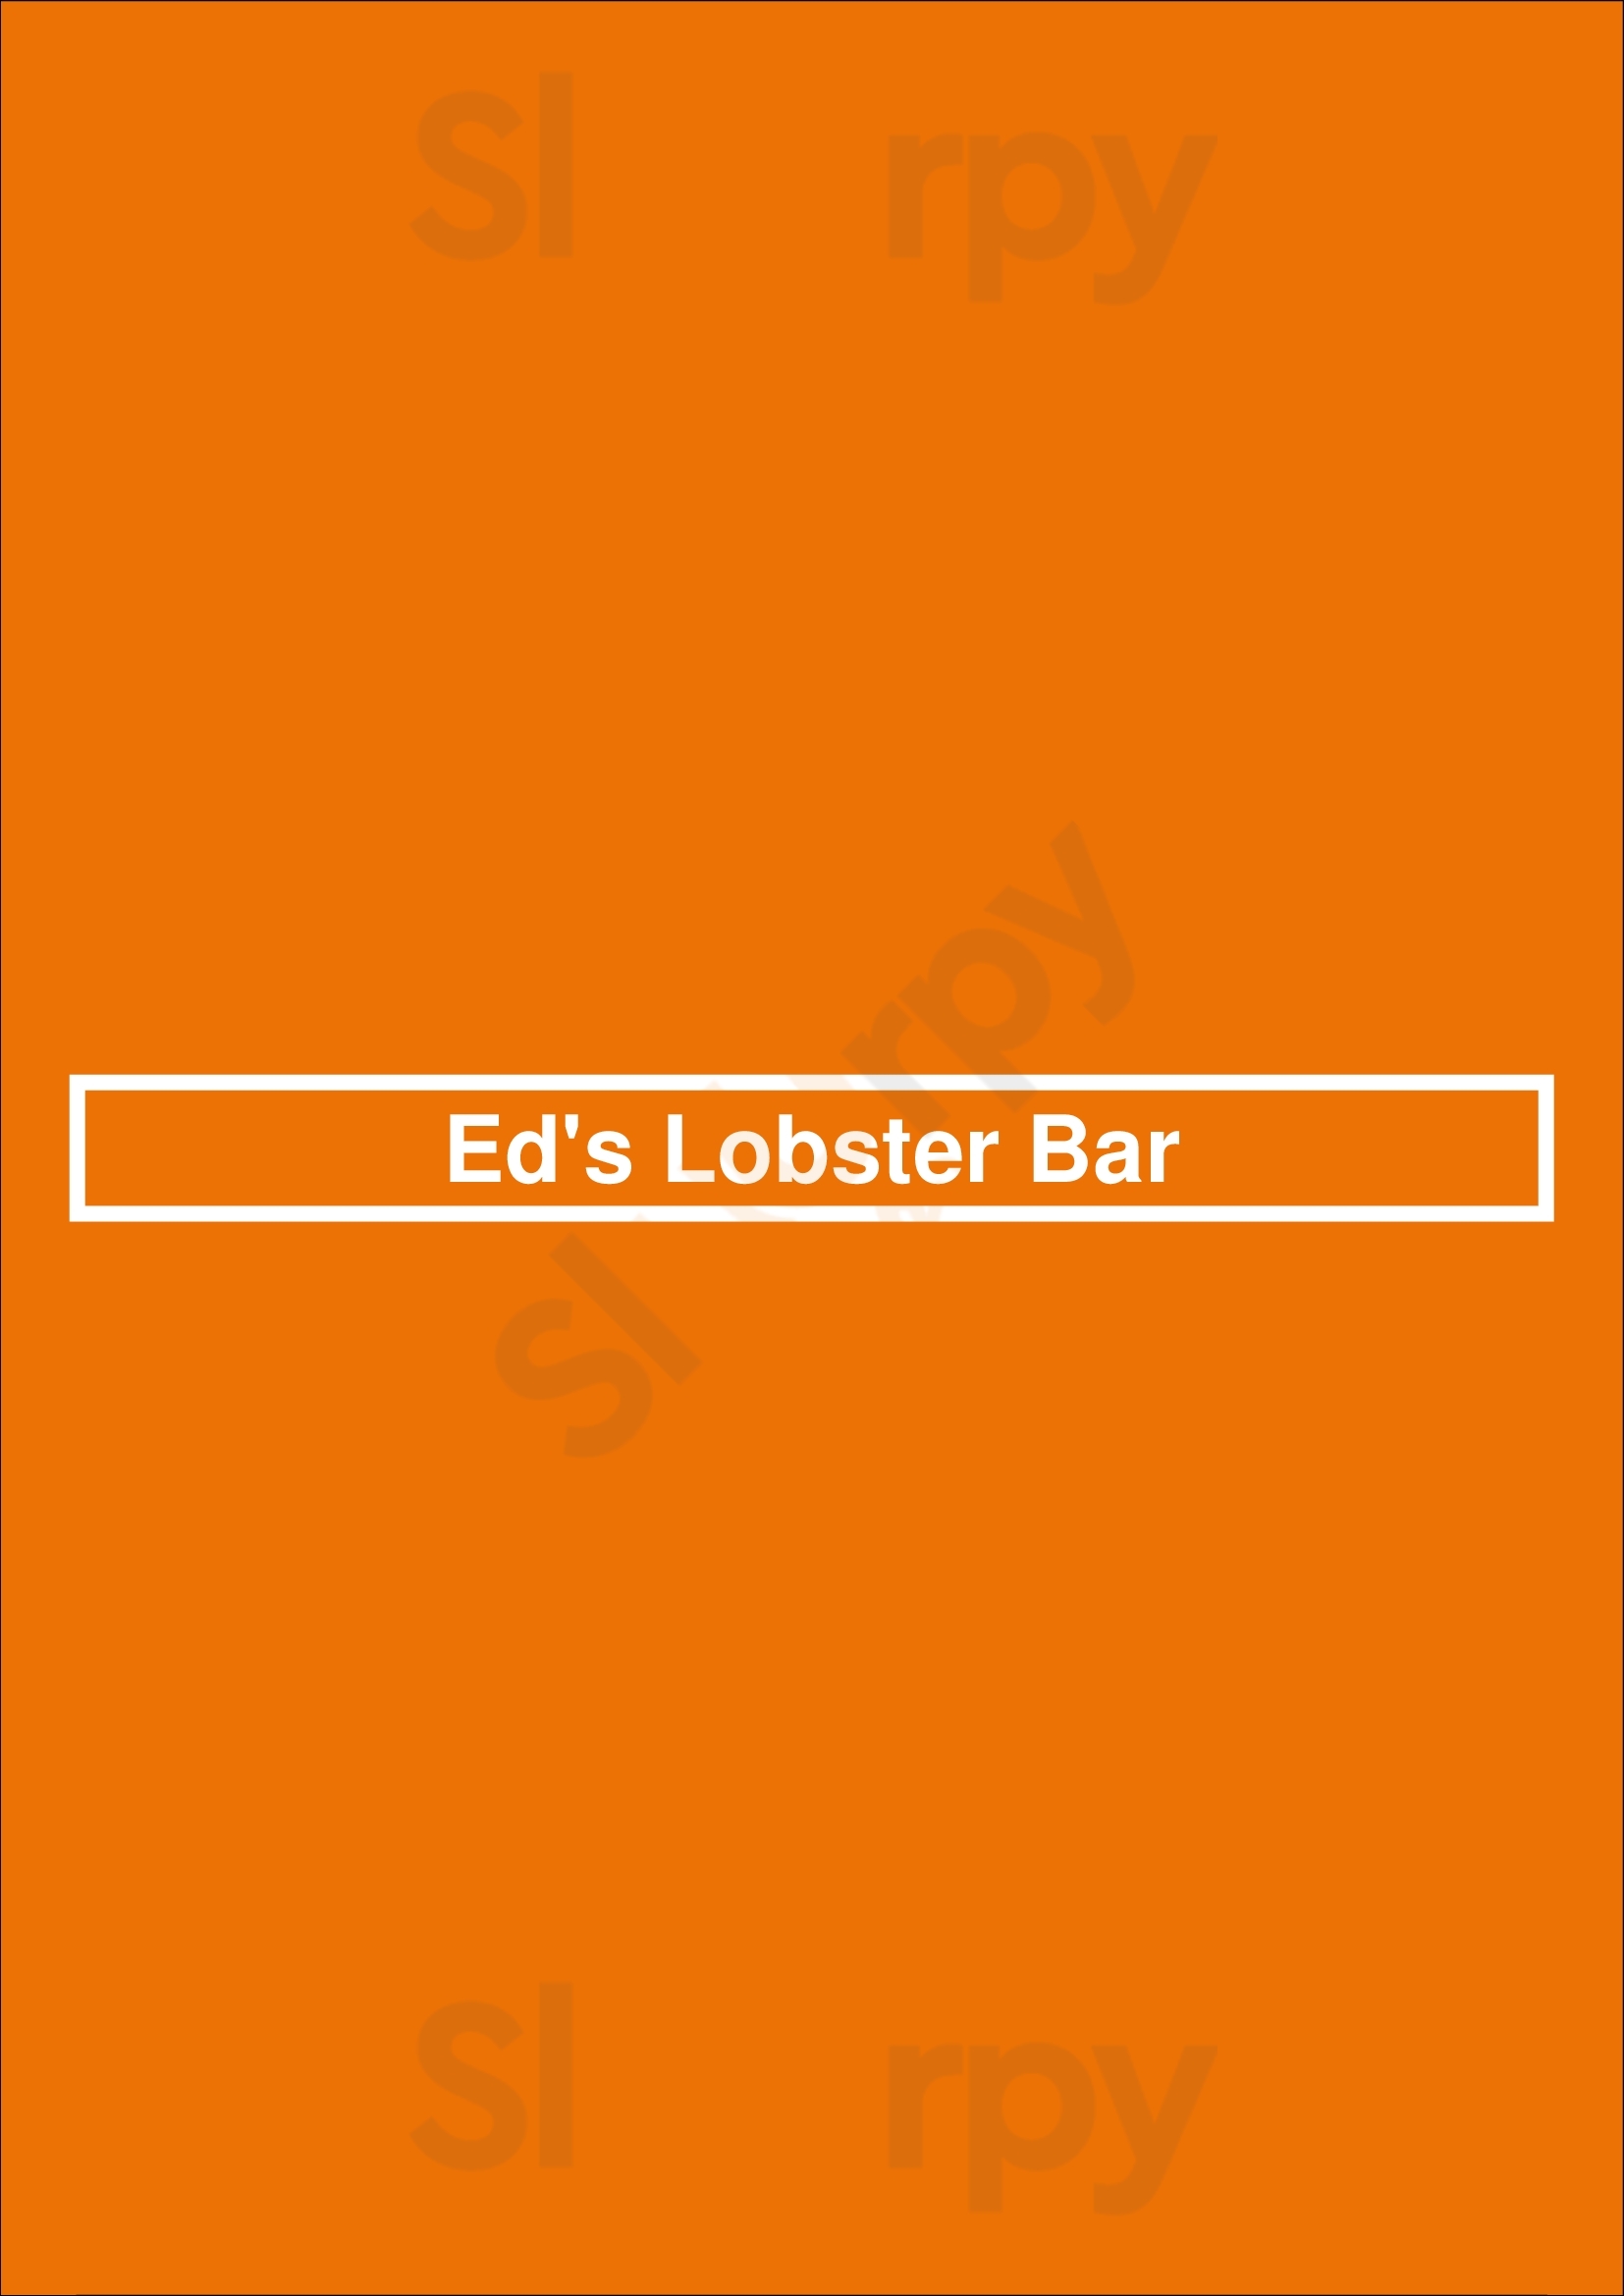 Ed's Lobster Bar New York City Menu - 1